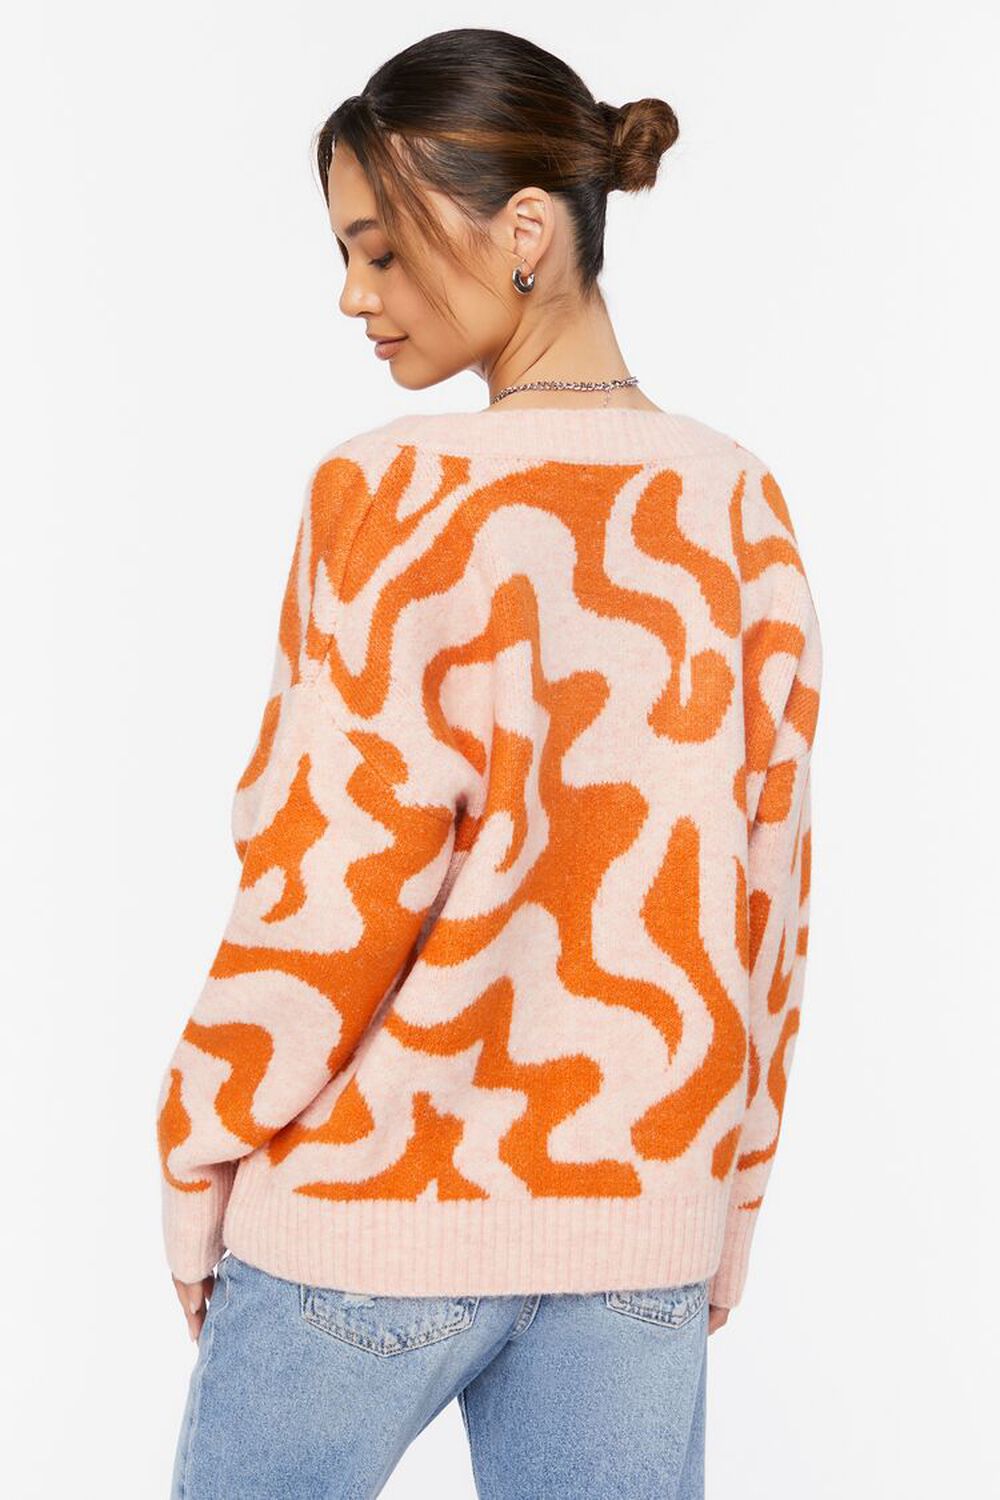 PINK/ORANGE Abstract Print V-Neck Sweater, image 3